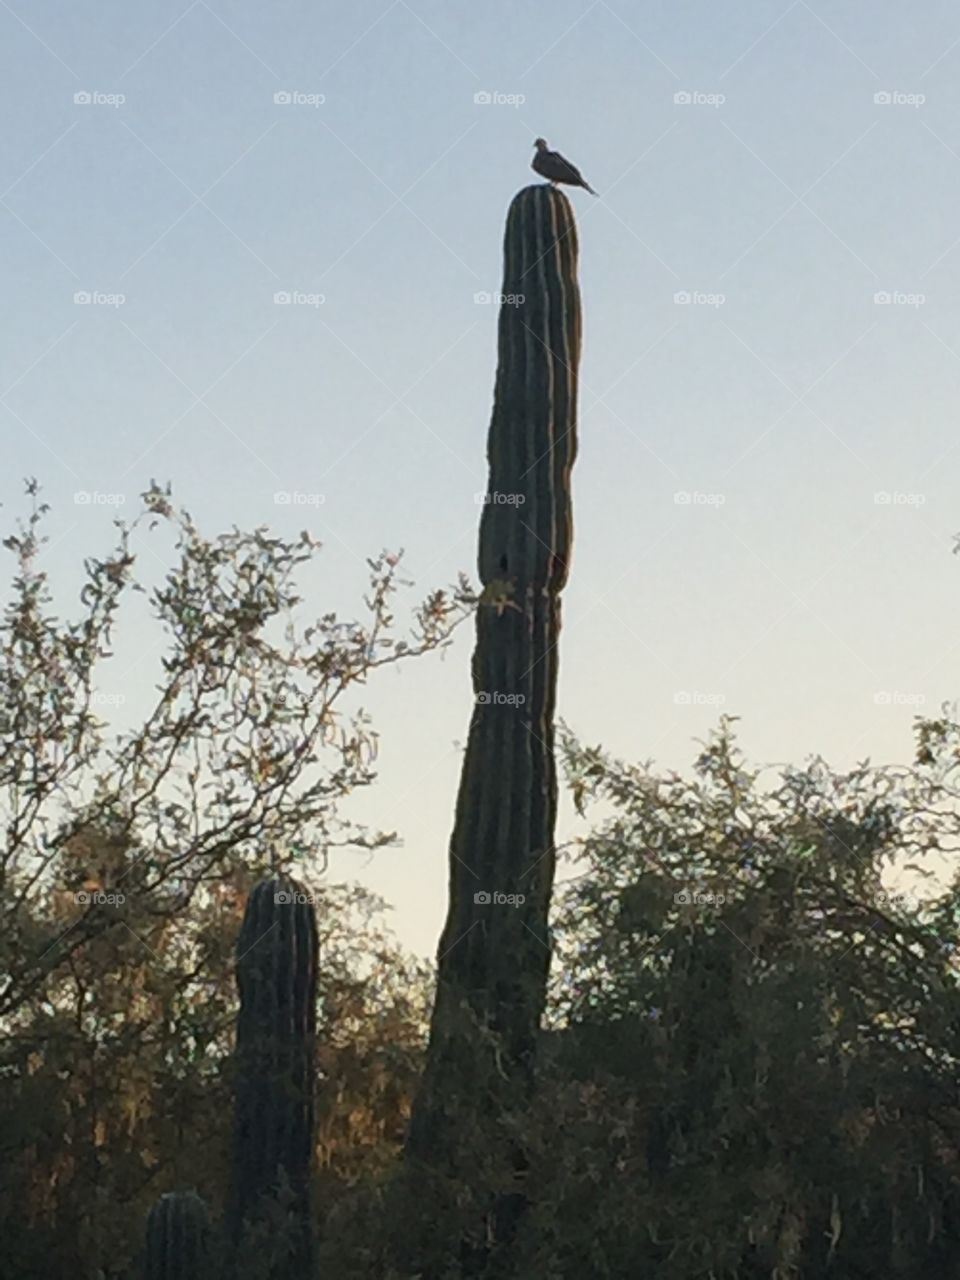 Dove perched on a saguaro cactus.